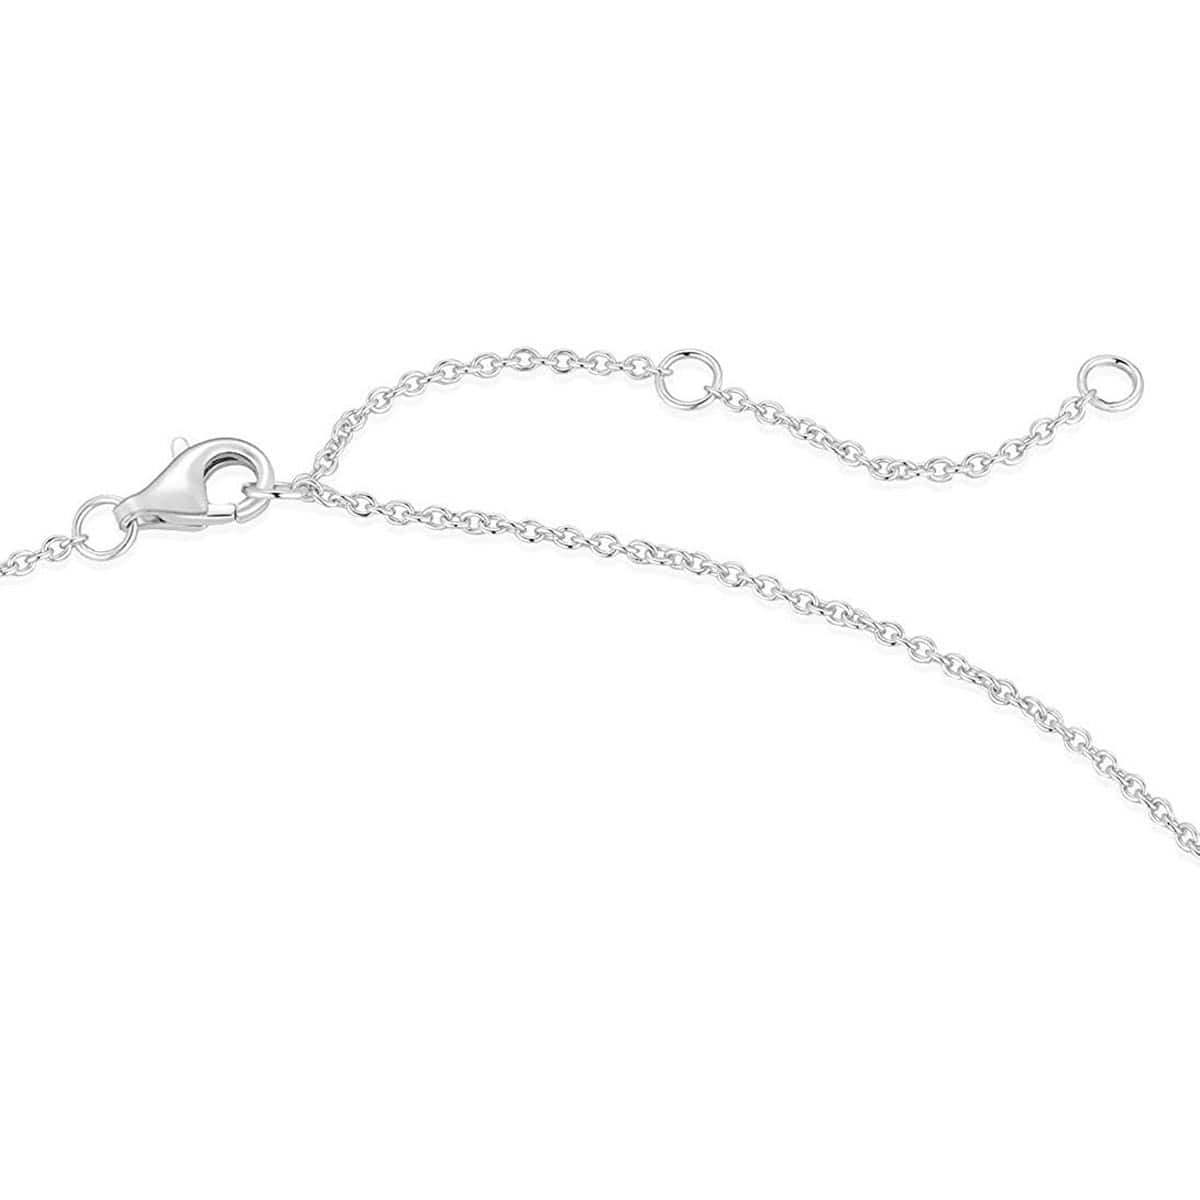 FANCIME Diamond Cut Cross Sterling Silver Necklace Link